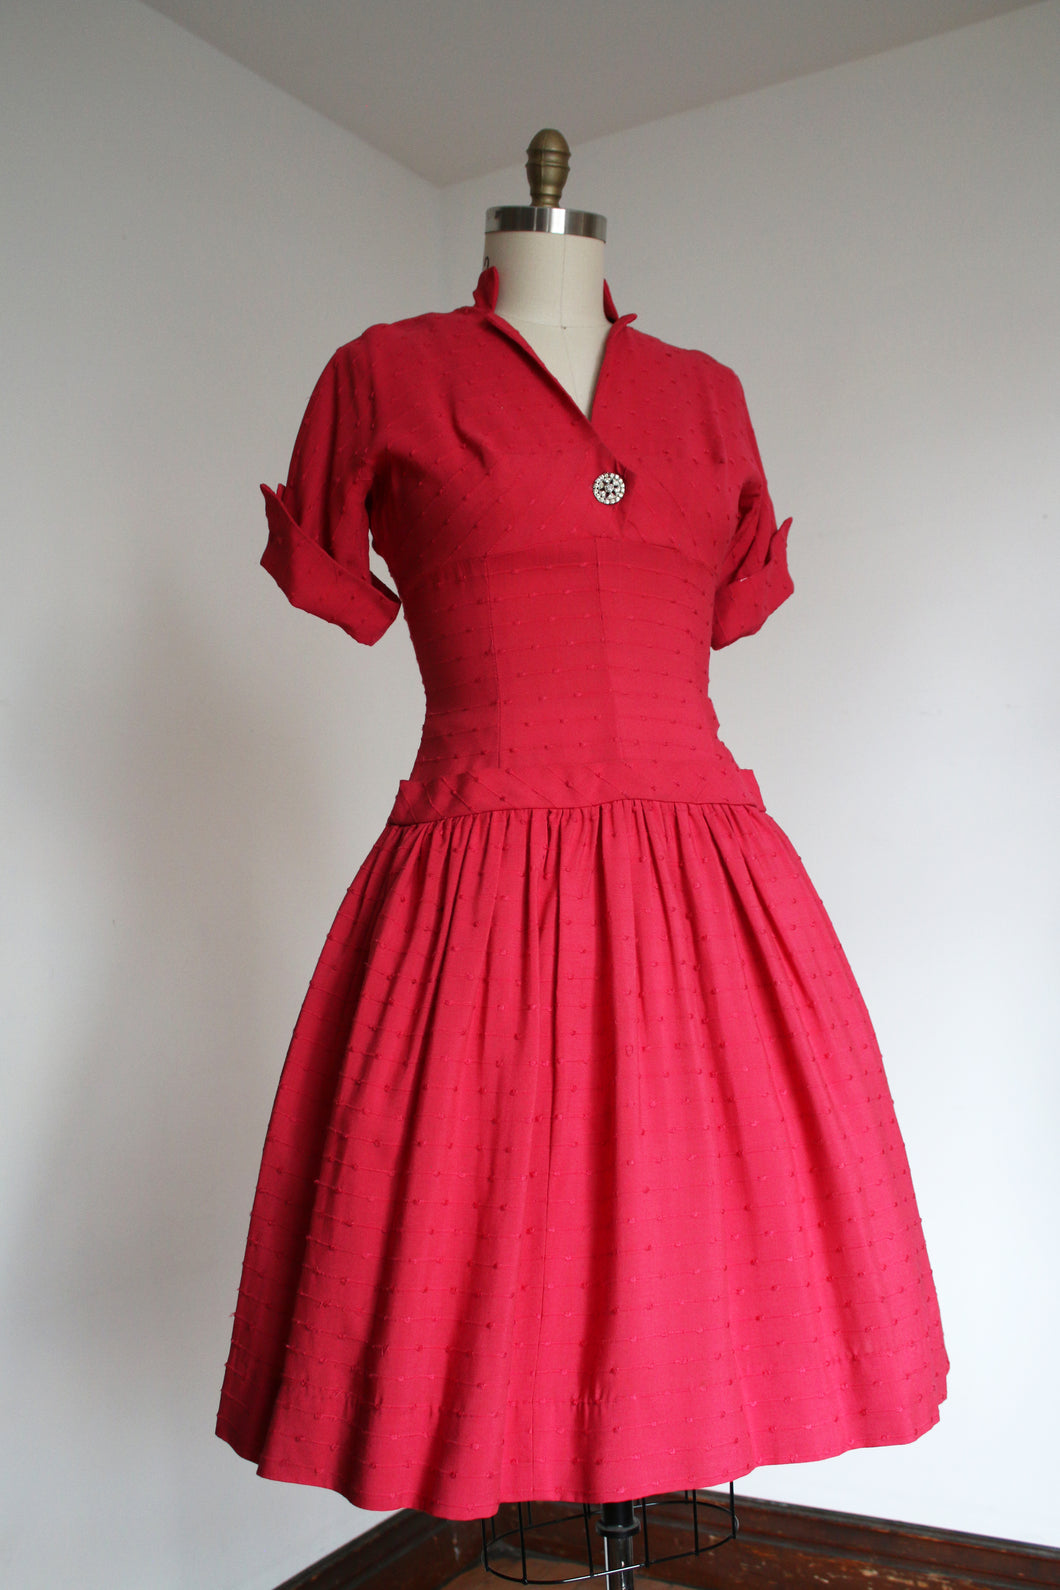 vintage 1950s pink party dress {m}